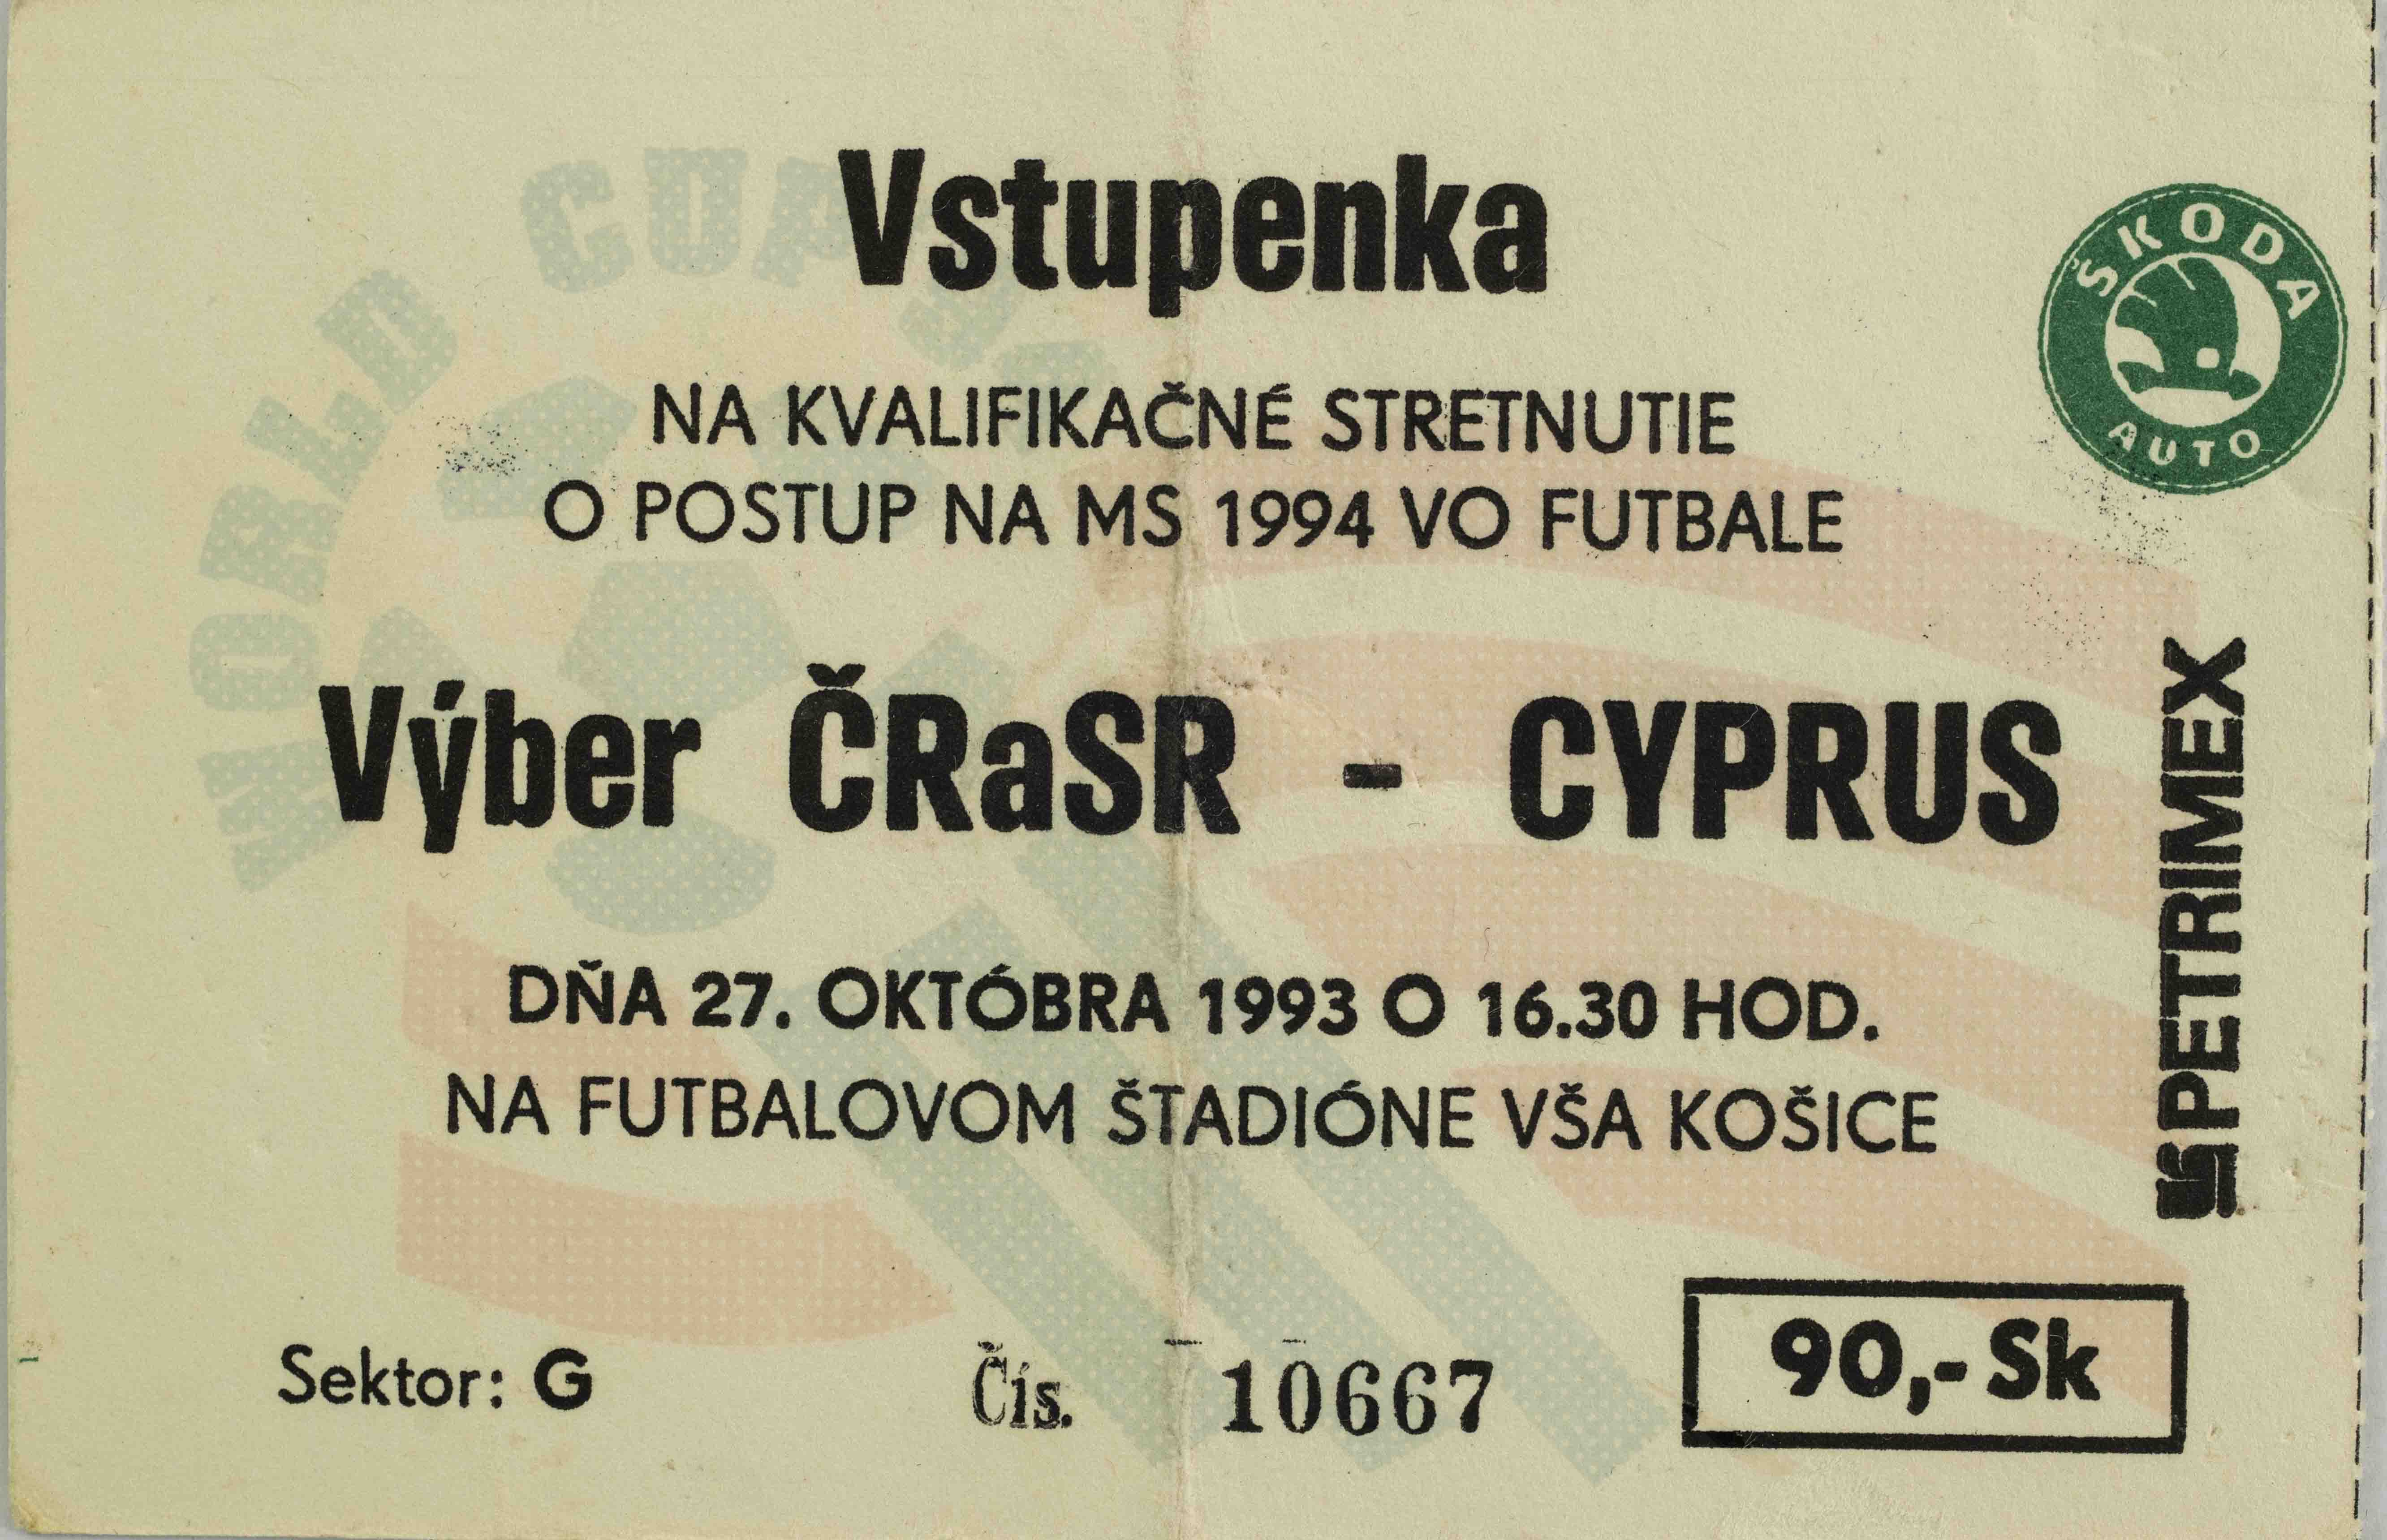 Vstupenka ČR a SR v. Cyprus QWCH 94 1993, VŠA Košice, 1990